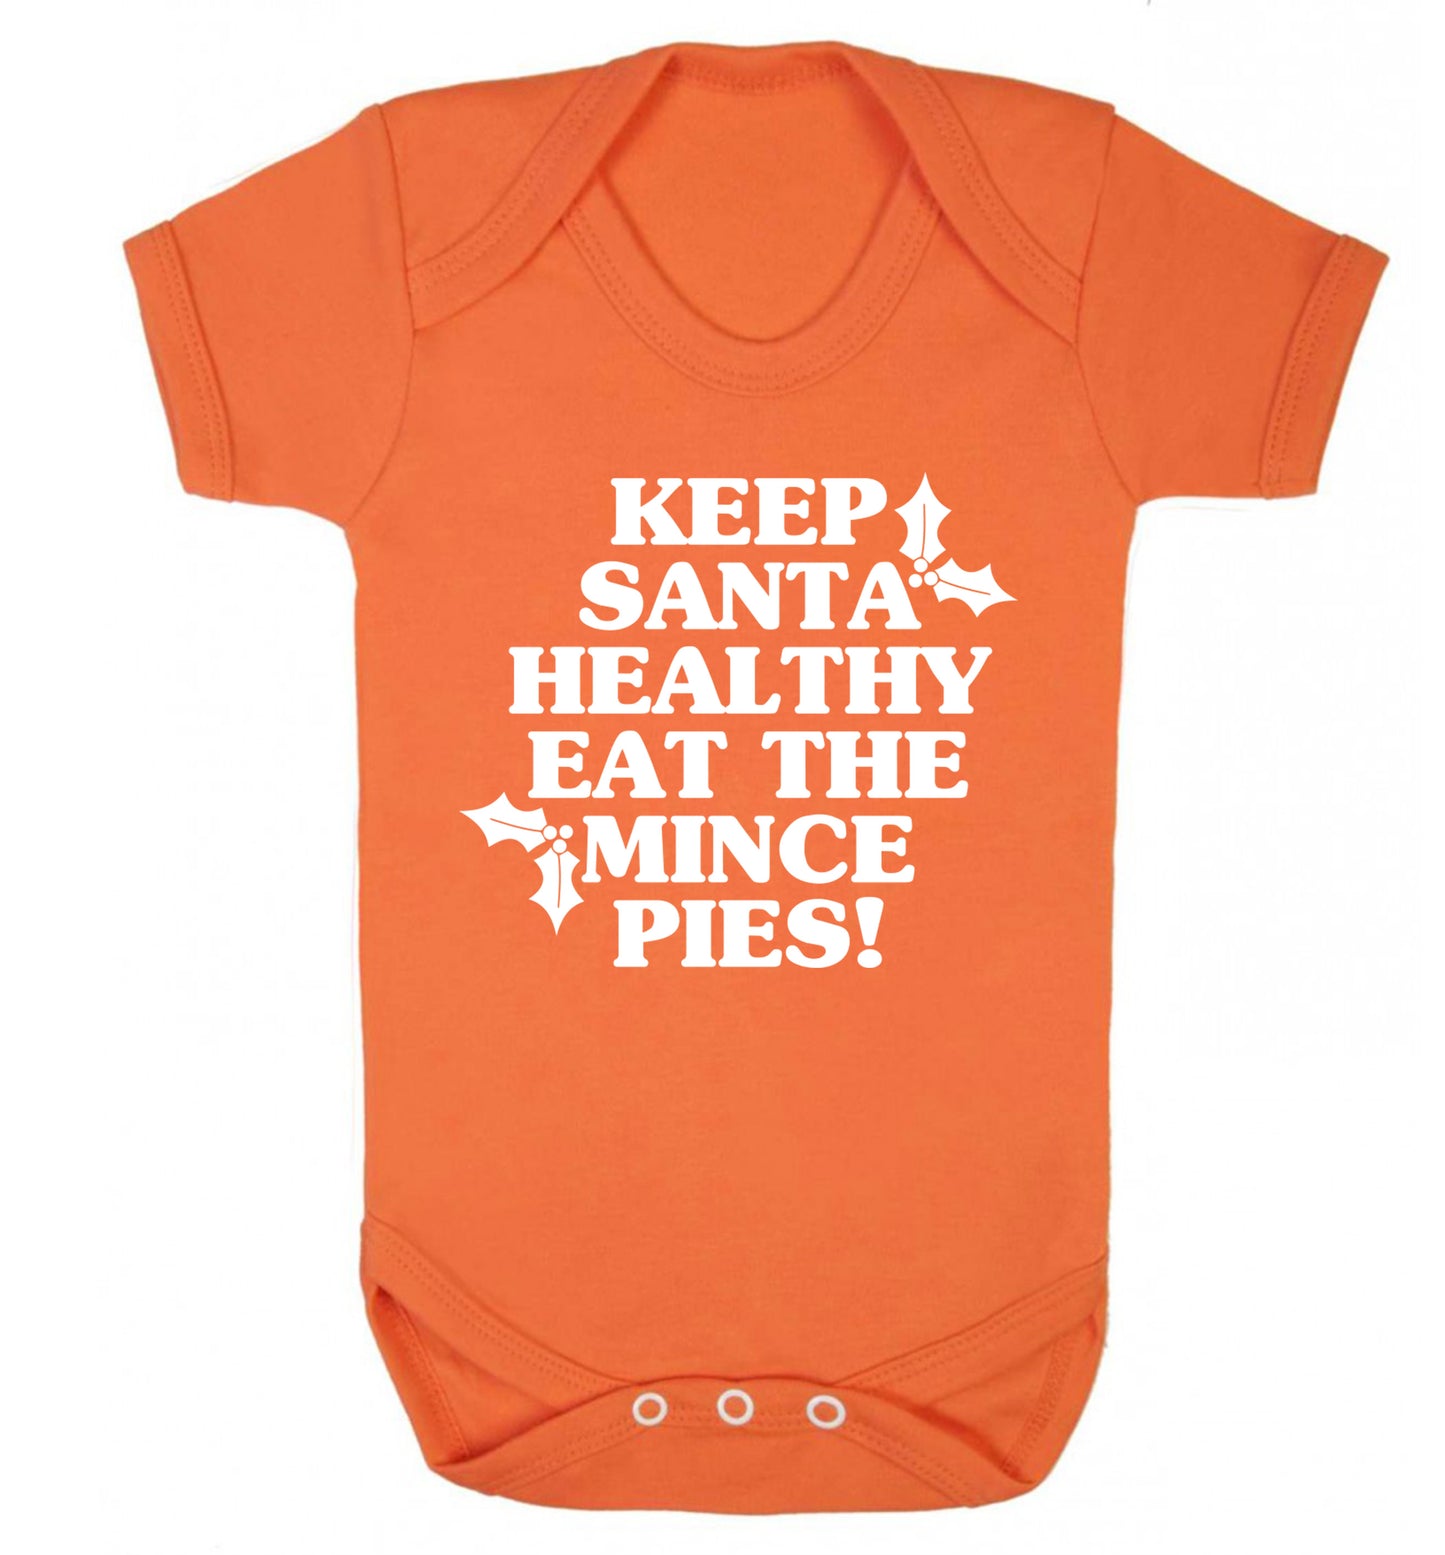 Keep santa healthy eat the mince pies Baby Vest orange 18-24 months